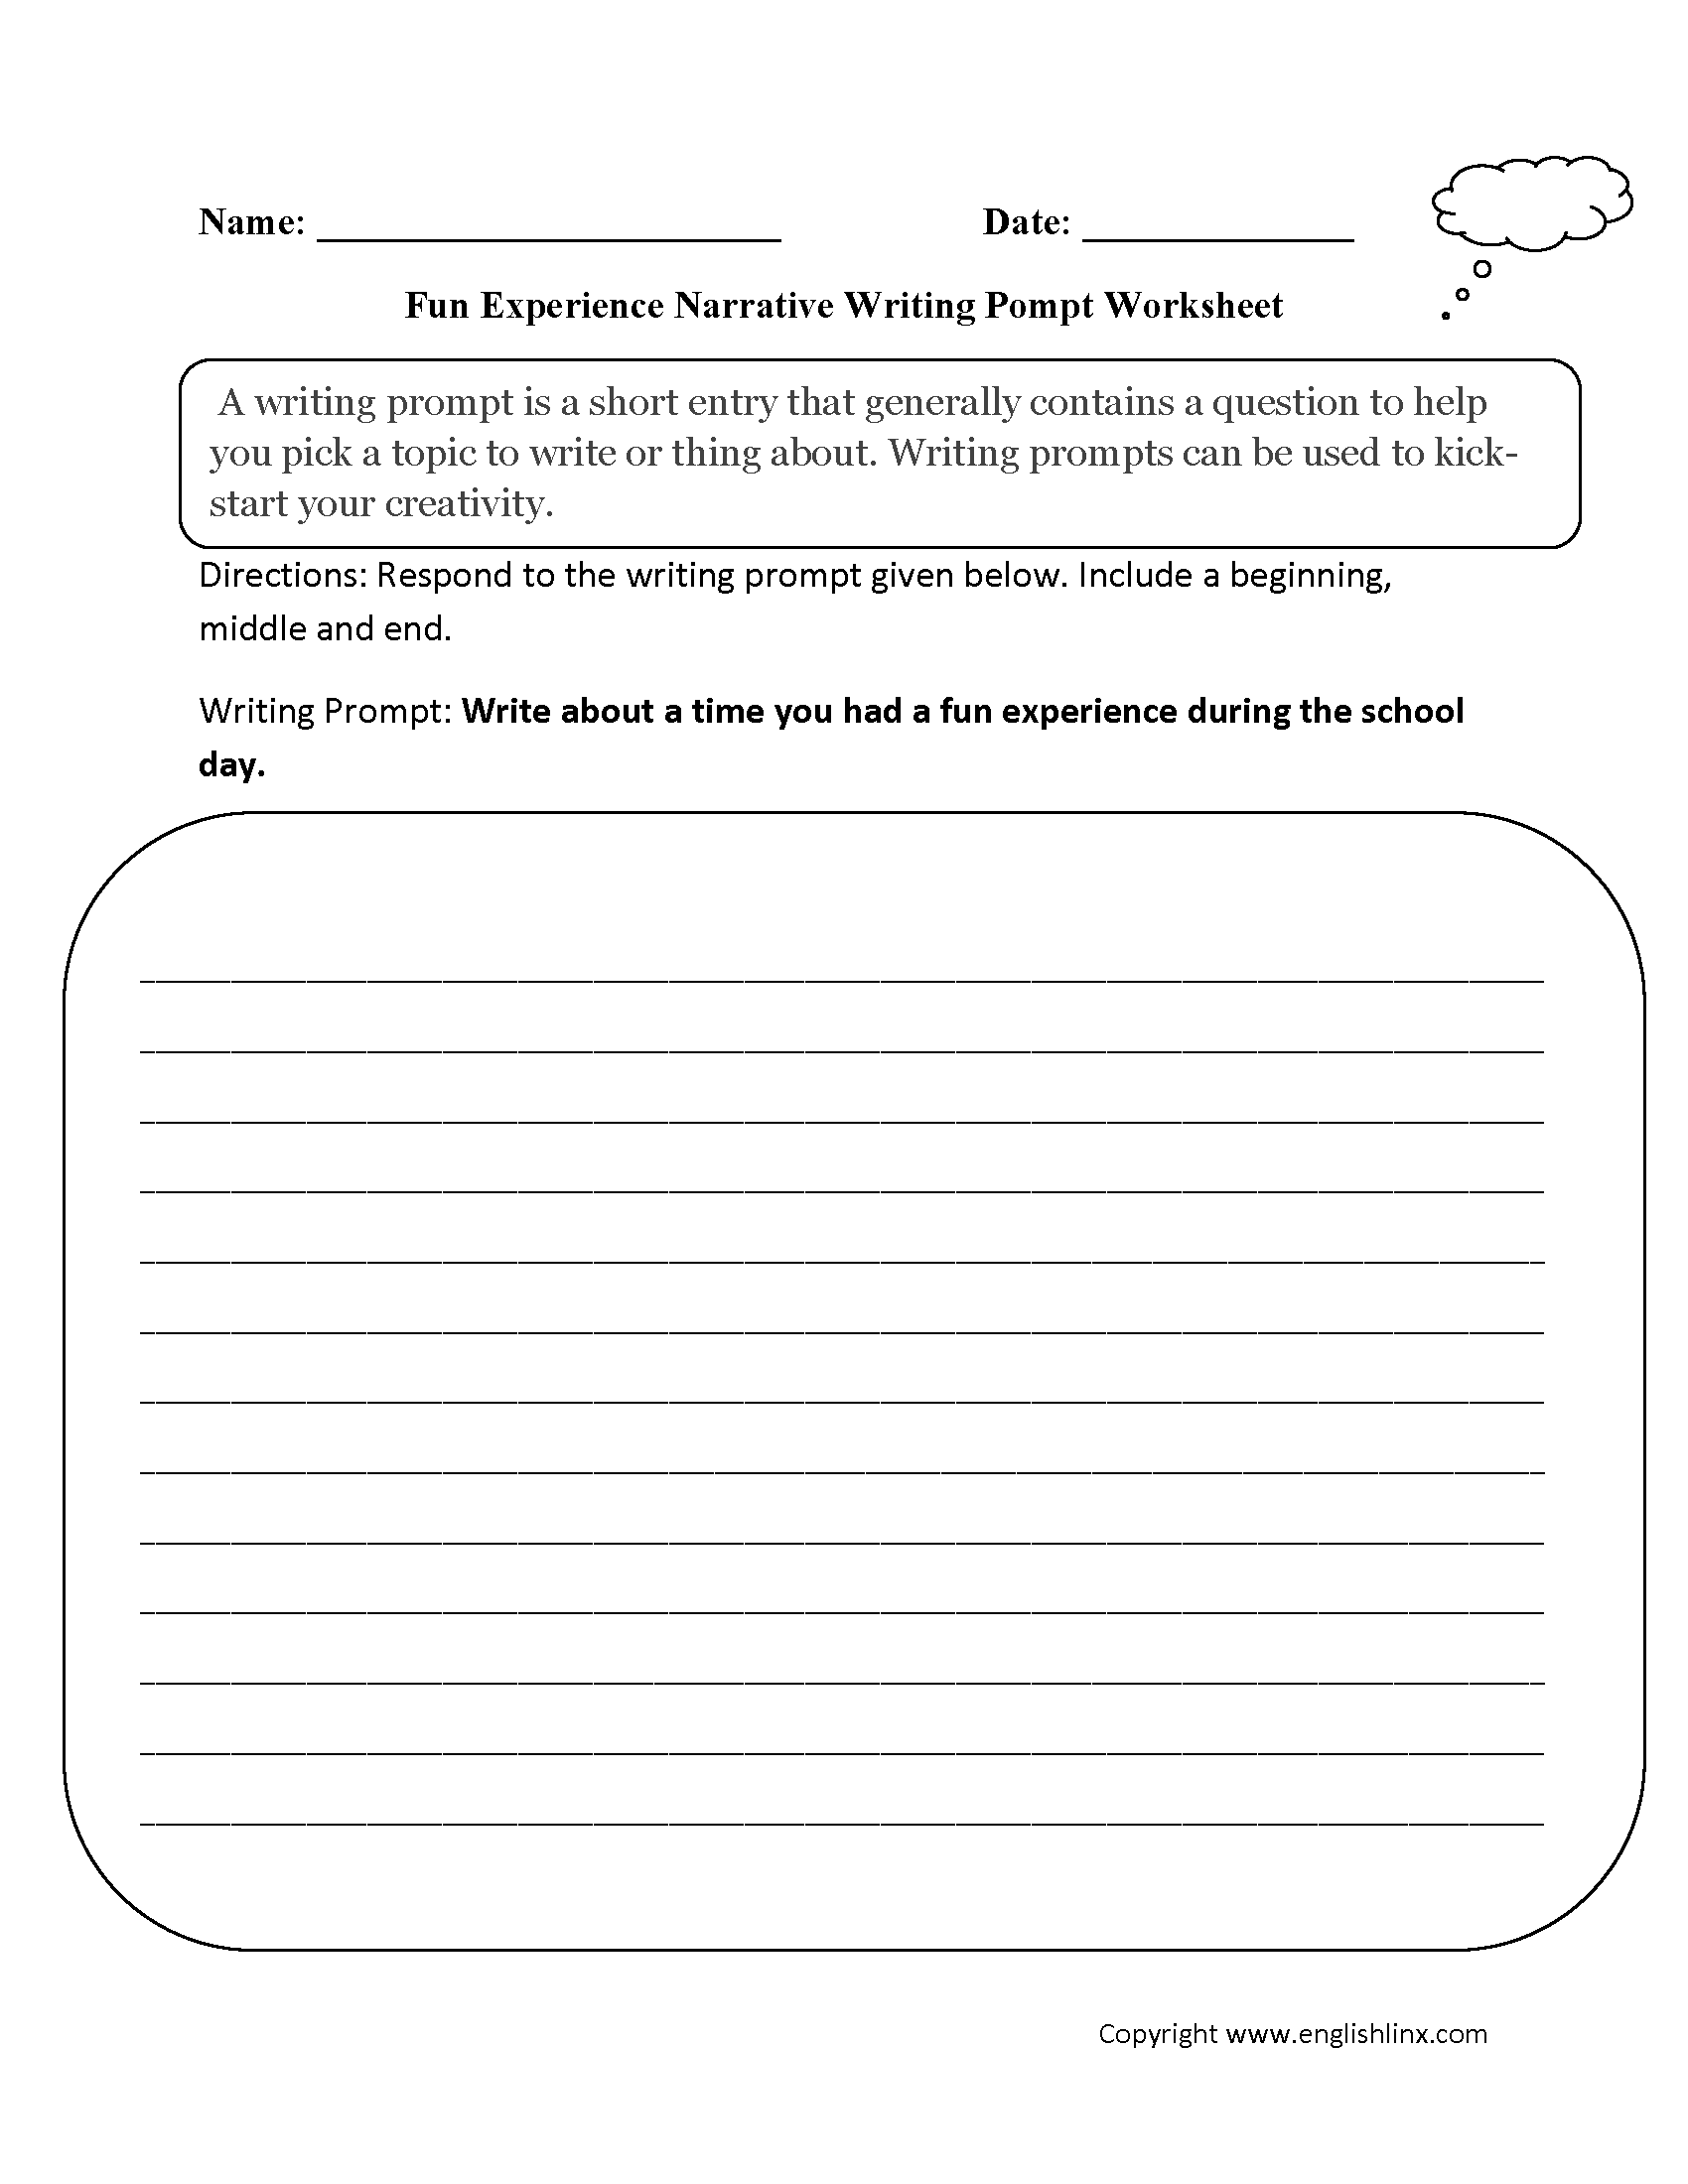 Fun Narrative Writing Prompt Worksheet